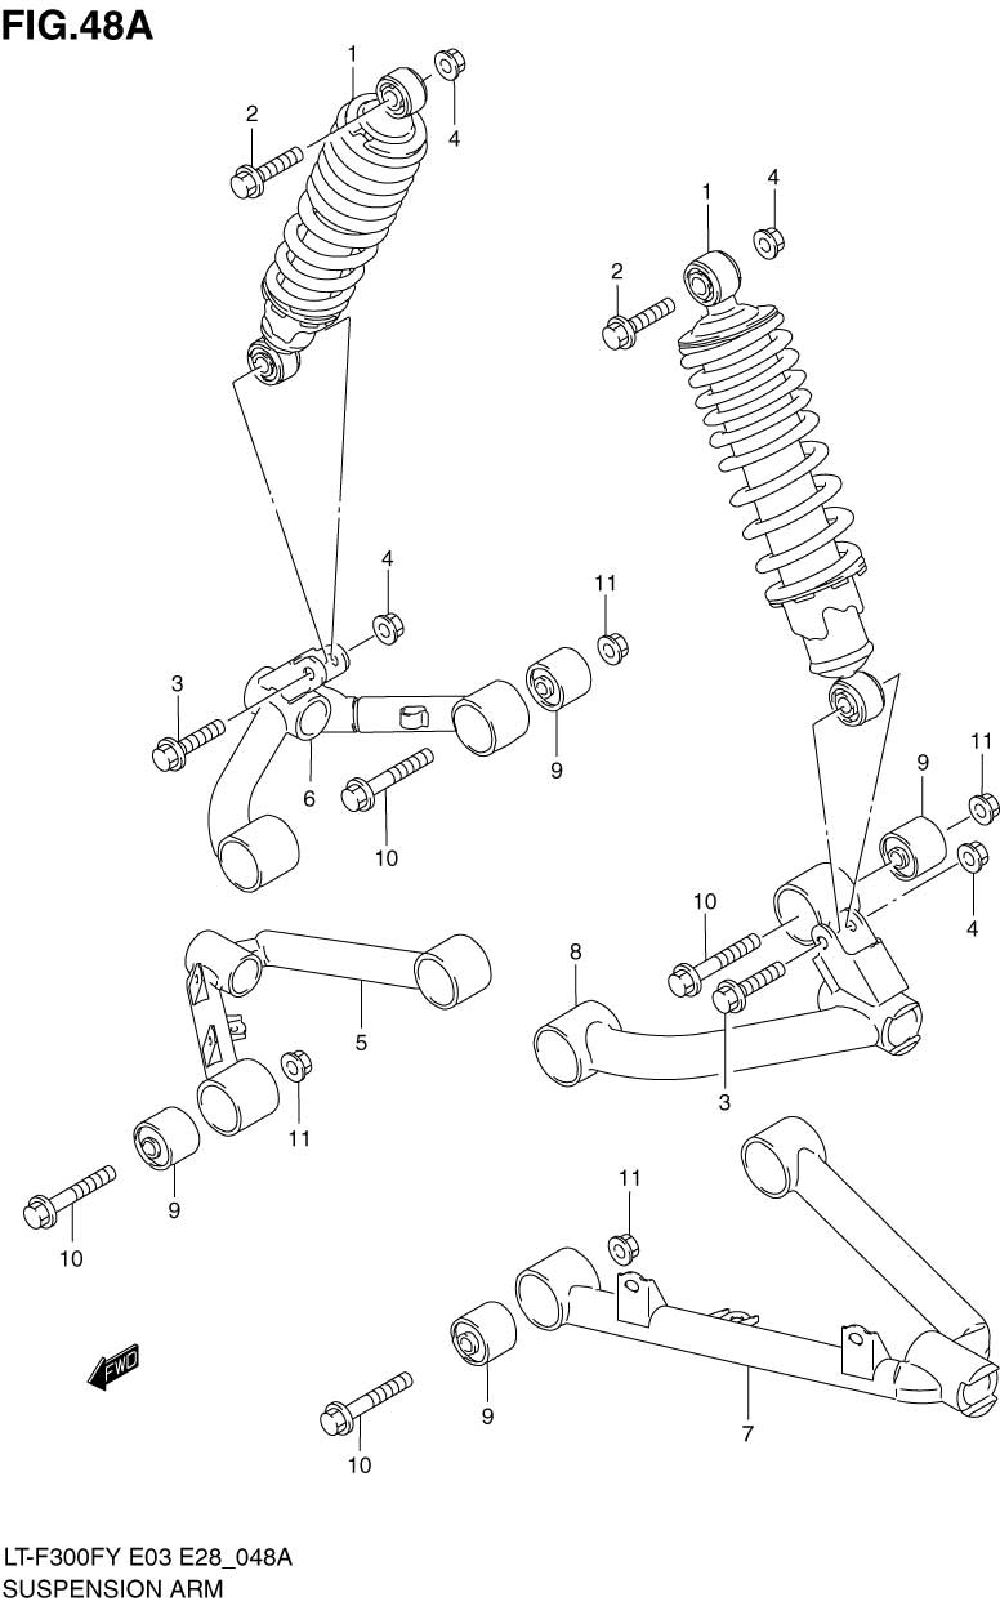 Suspension arm (model k2)